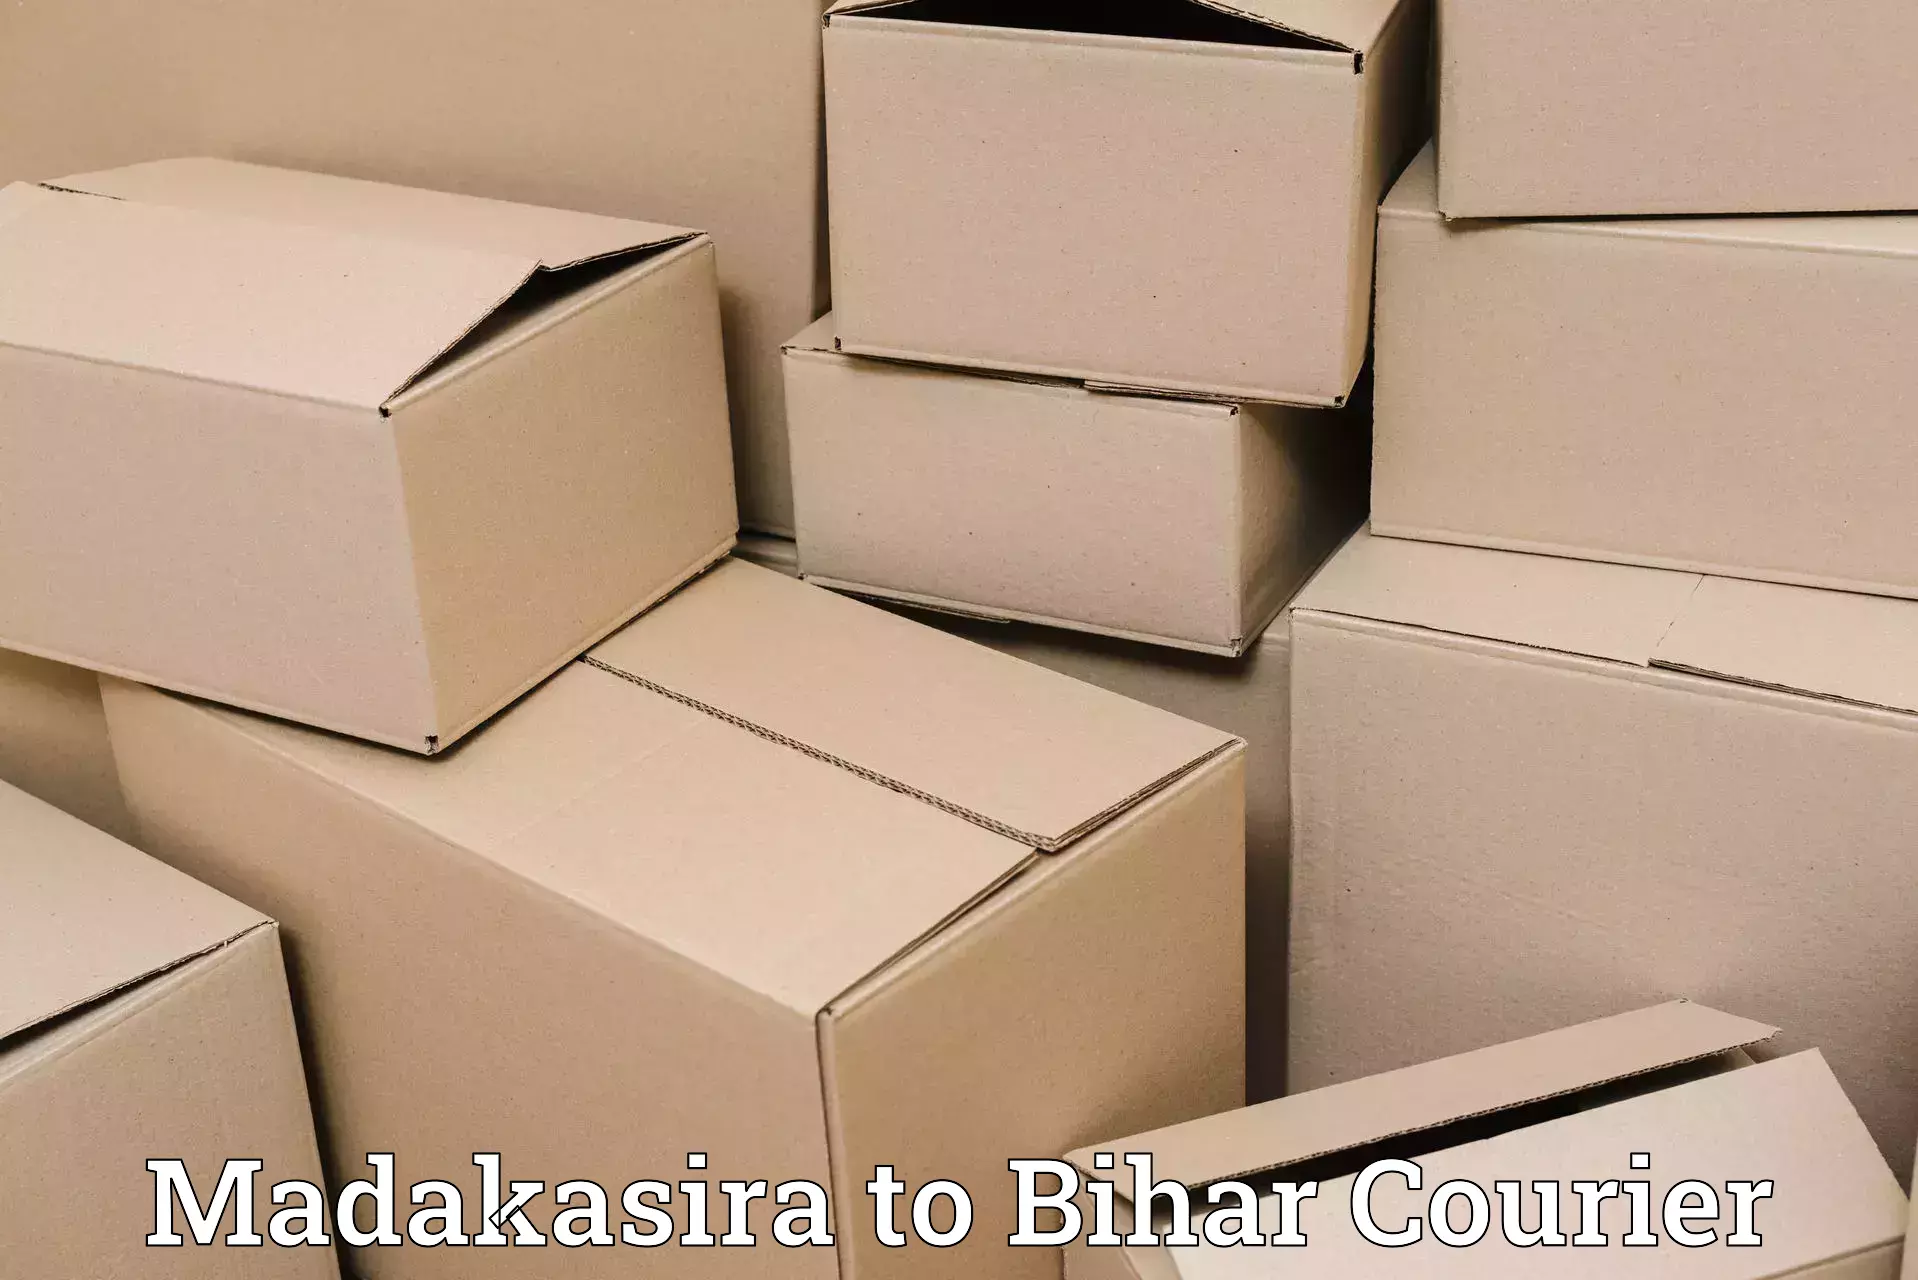 Express logistics providers Madakasira to Bihar